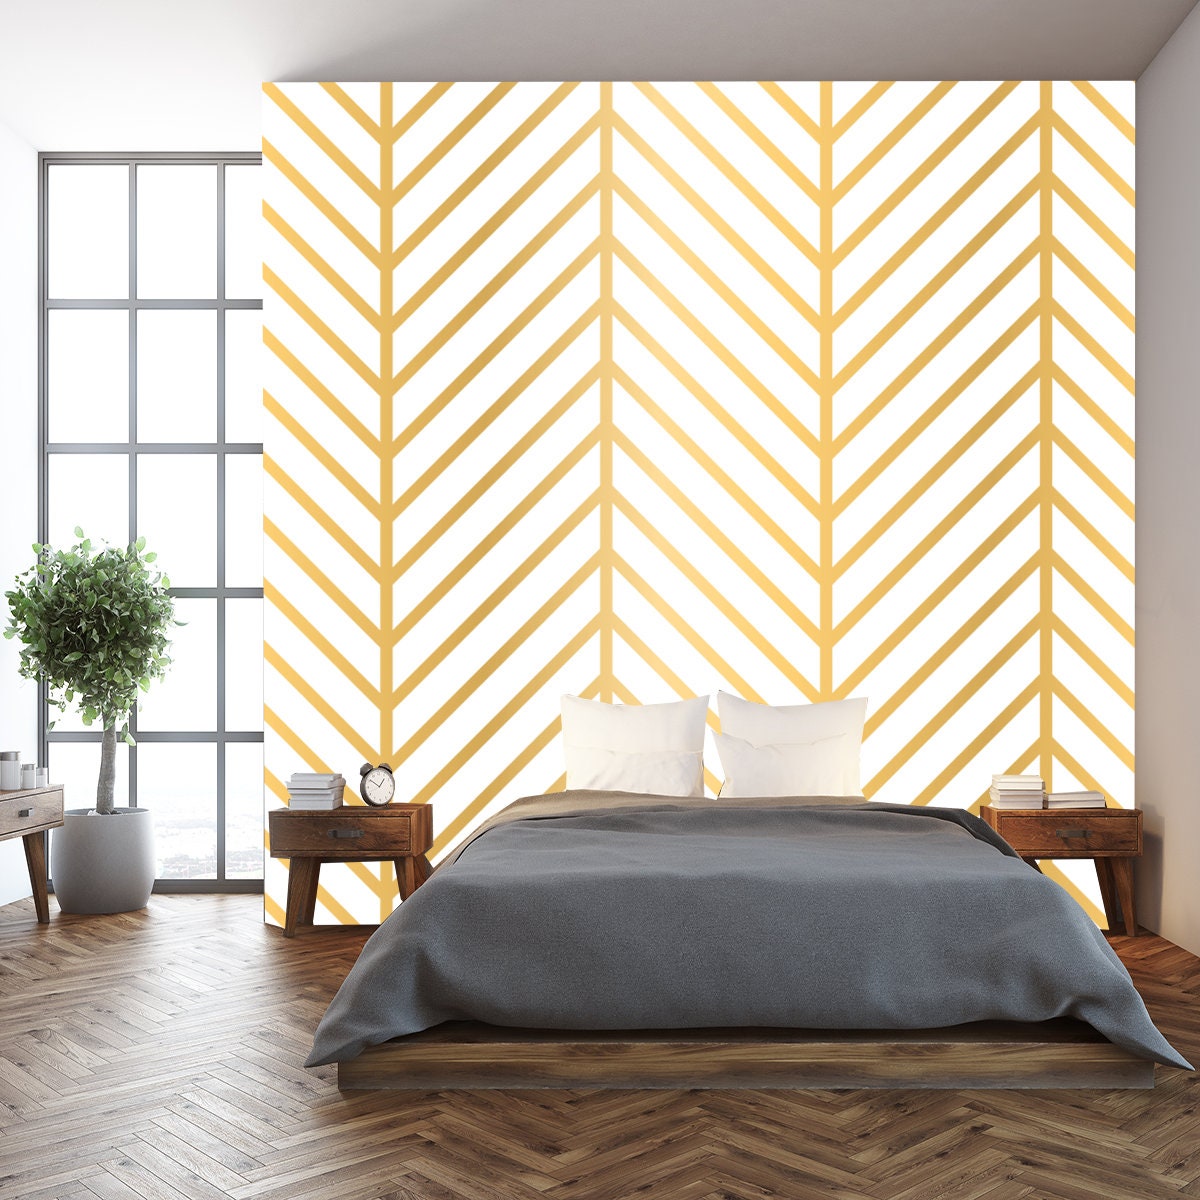 Golden Tiles Seamless Chevron Pattern. Fishbone Yellow Parque Wallpaper Bedroom Mural